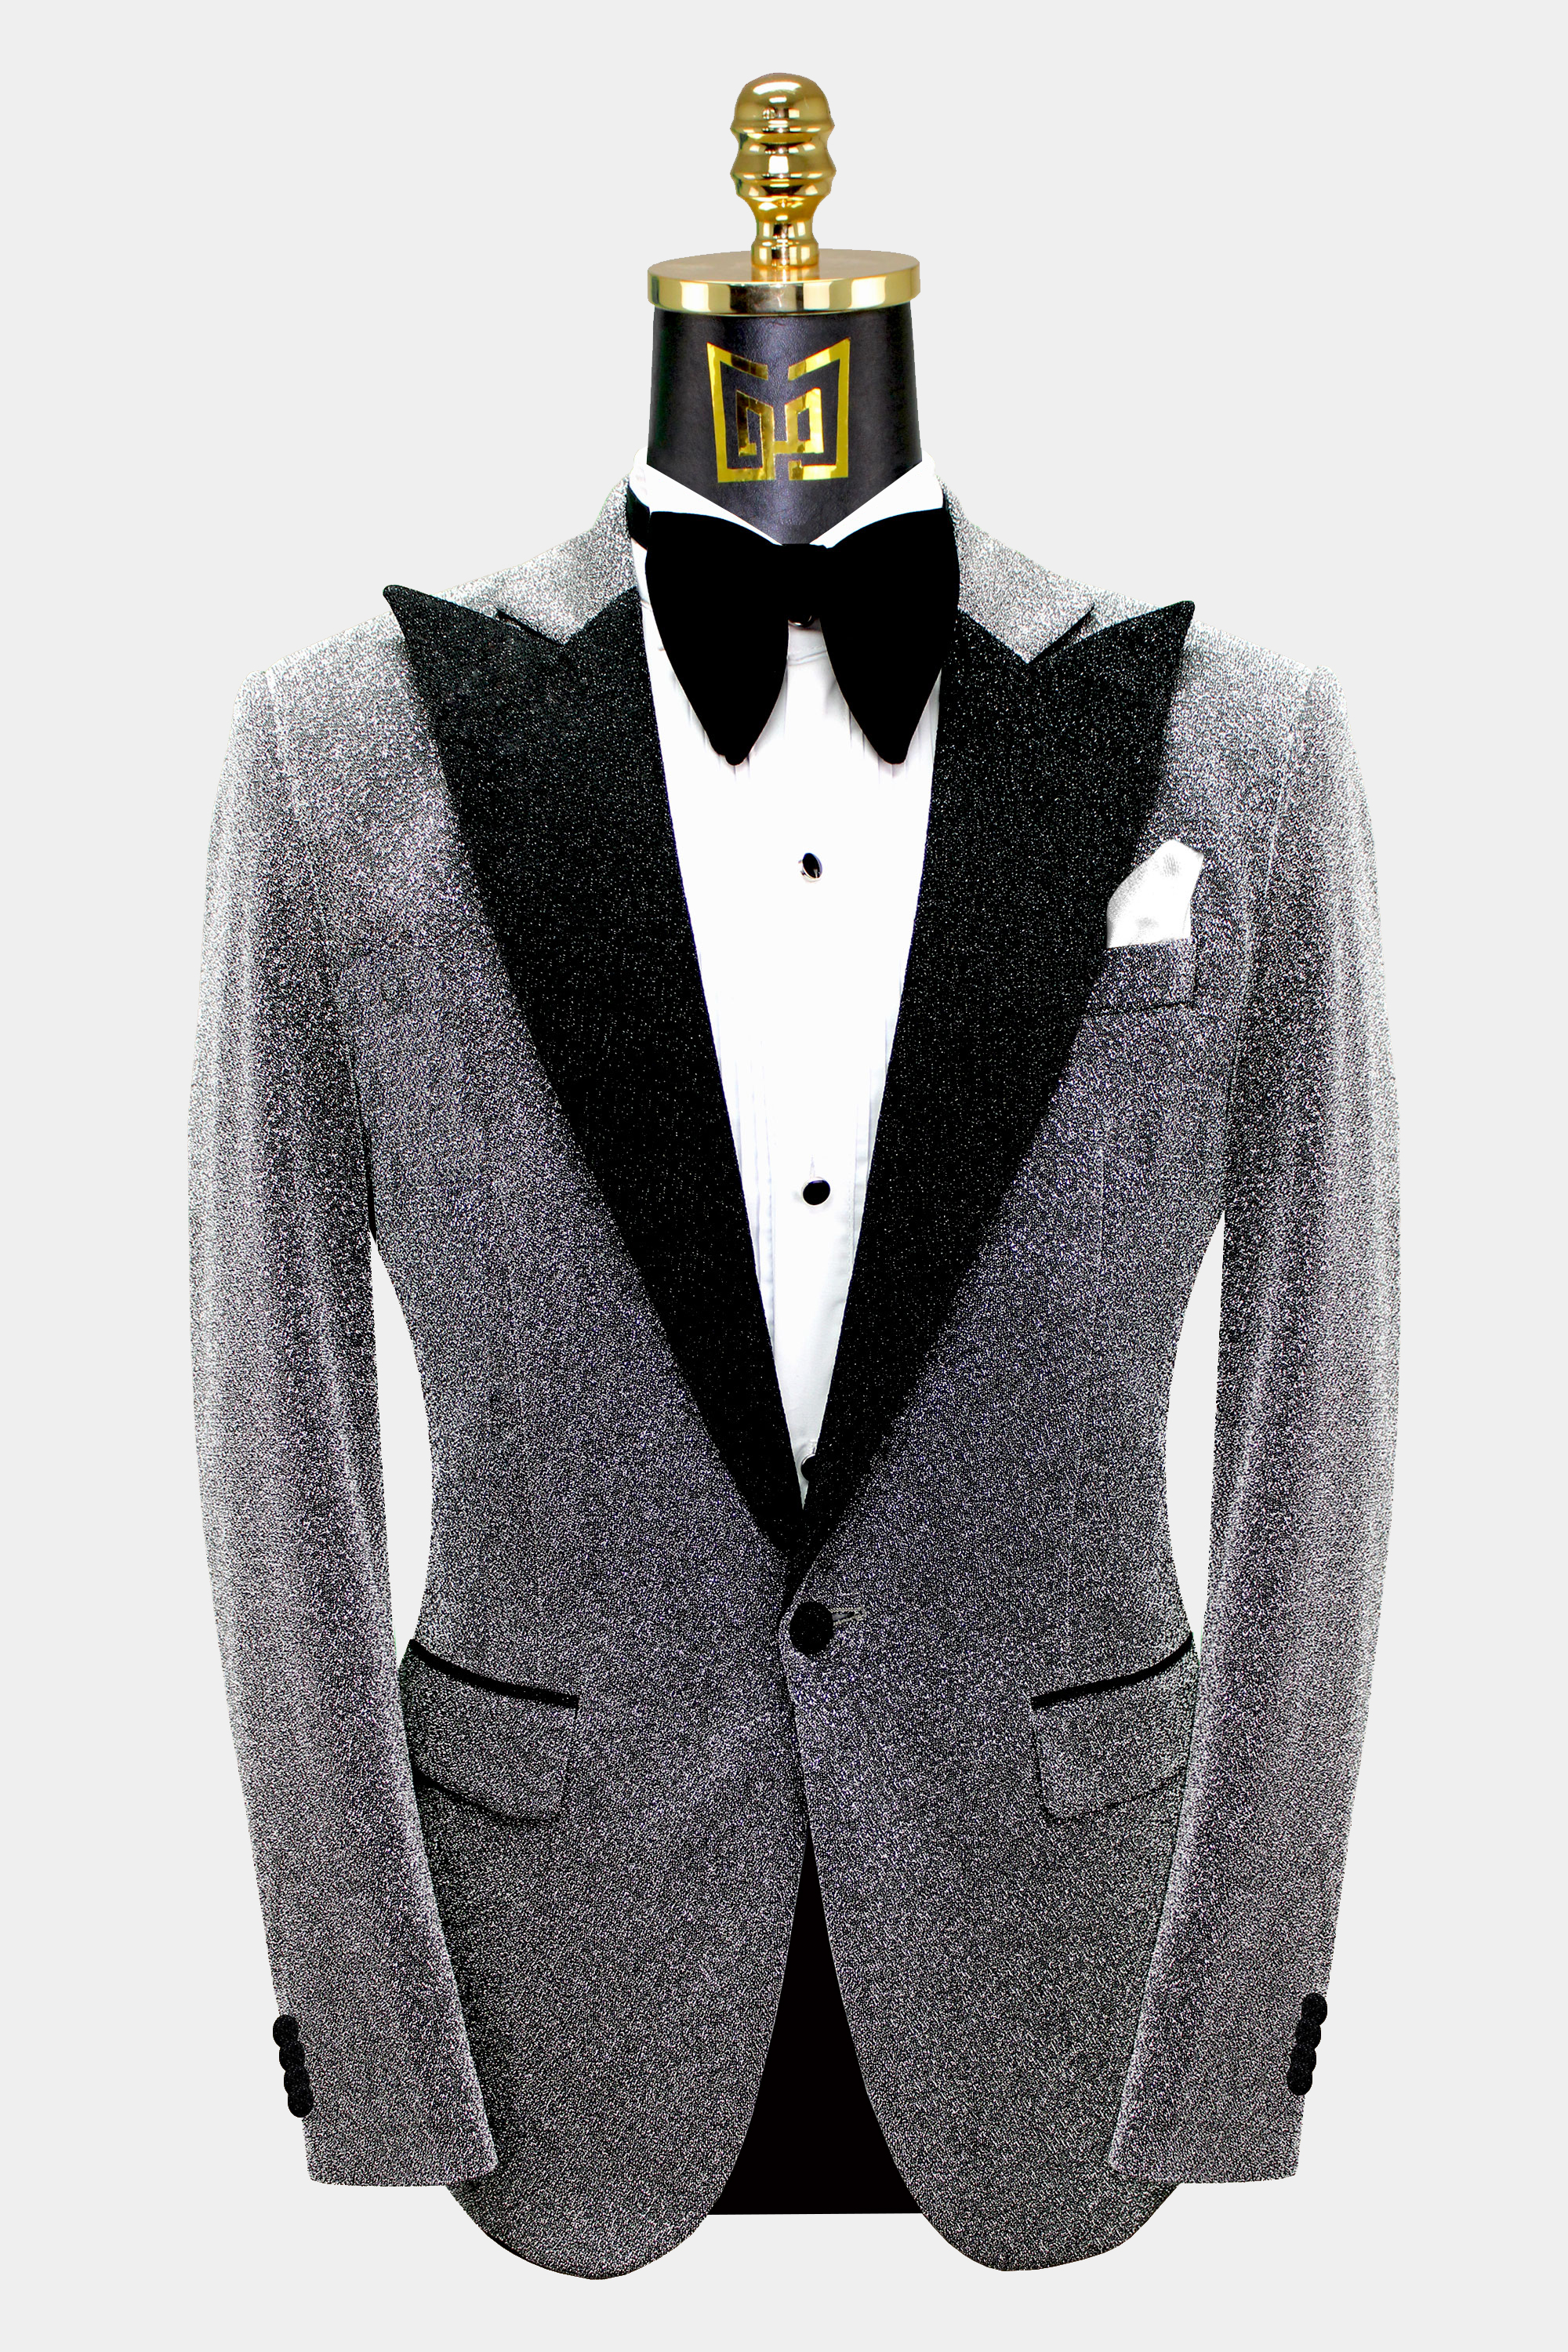 Mens-Silver-Glitter-Tuxedo-Jacket-Groom-Wedding-Prom-Blazer-from-Gentlemansguru.com